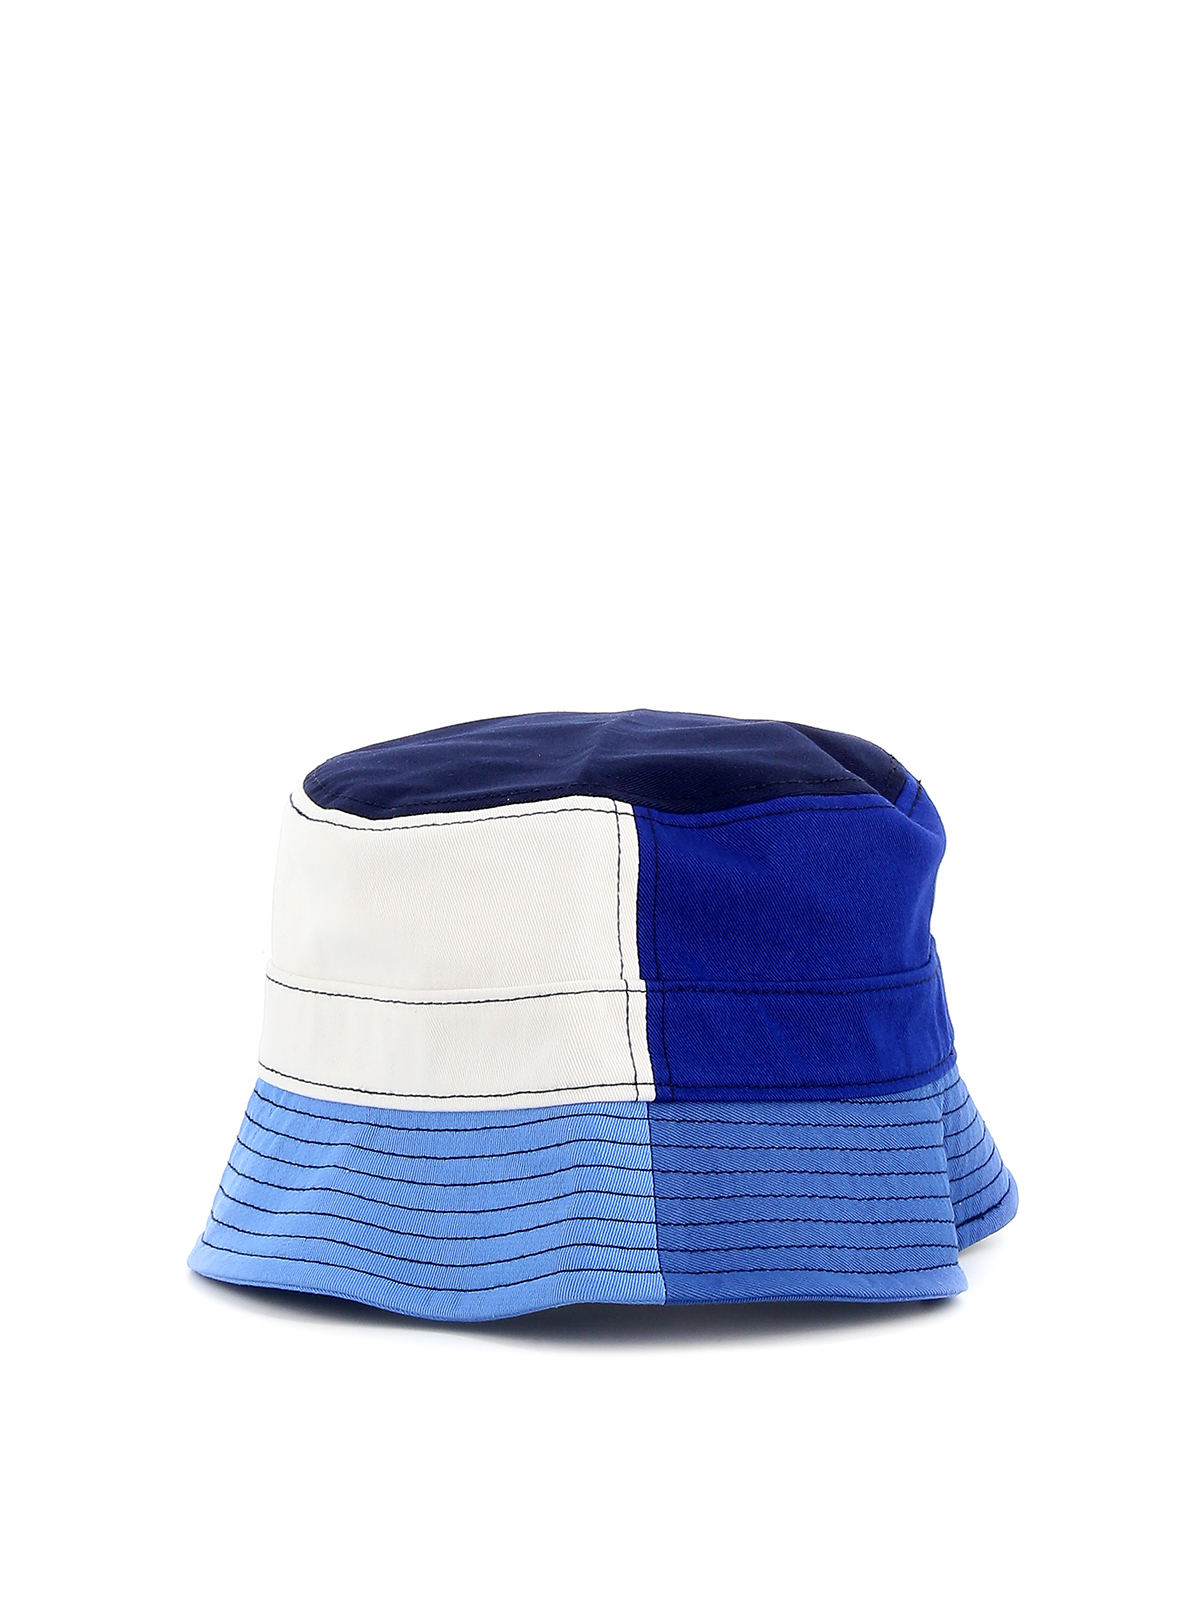 Sombreros Lacoste - Sombrero - - RK25757QL | THEBS [iKRIX]